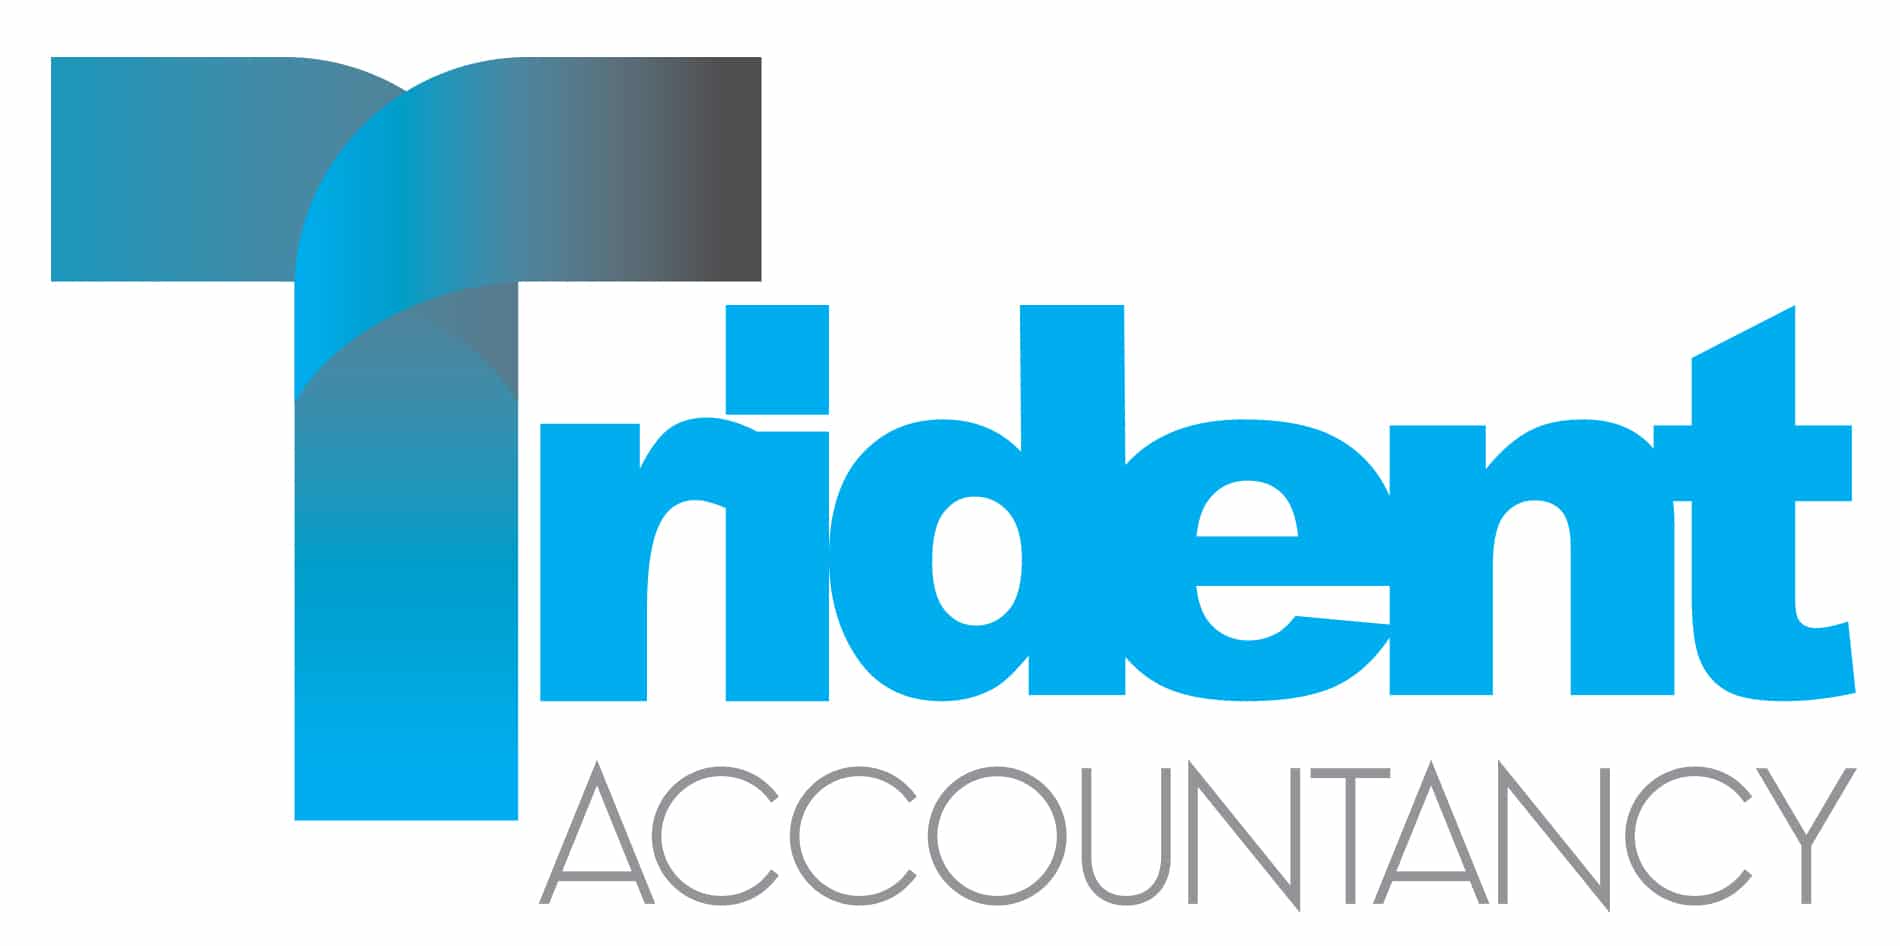 Trident Accountancy